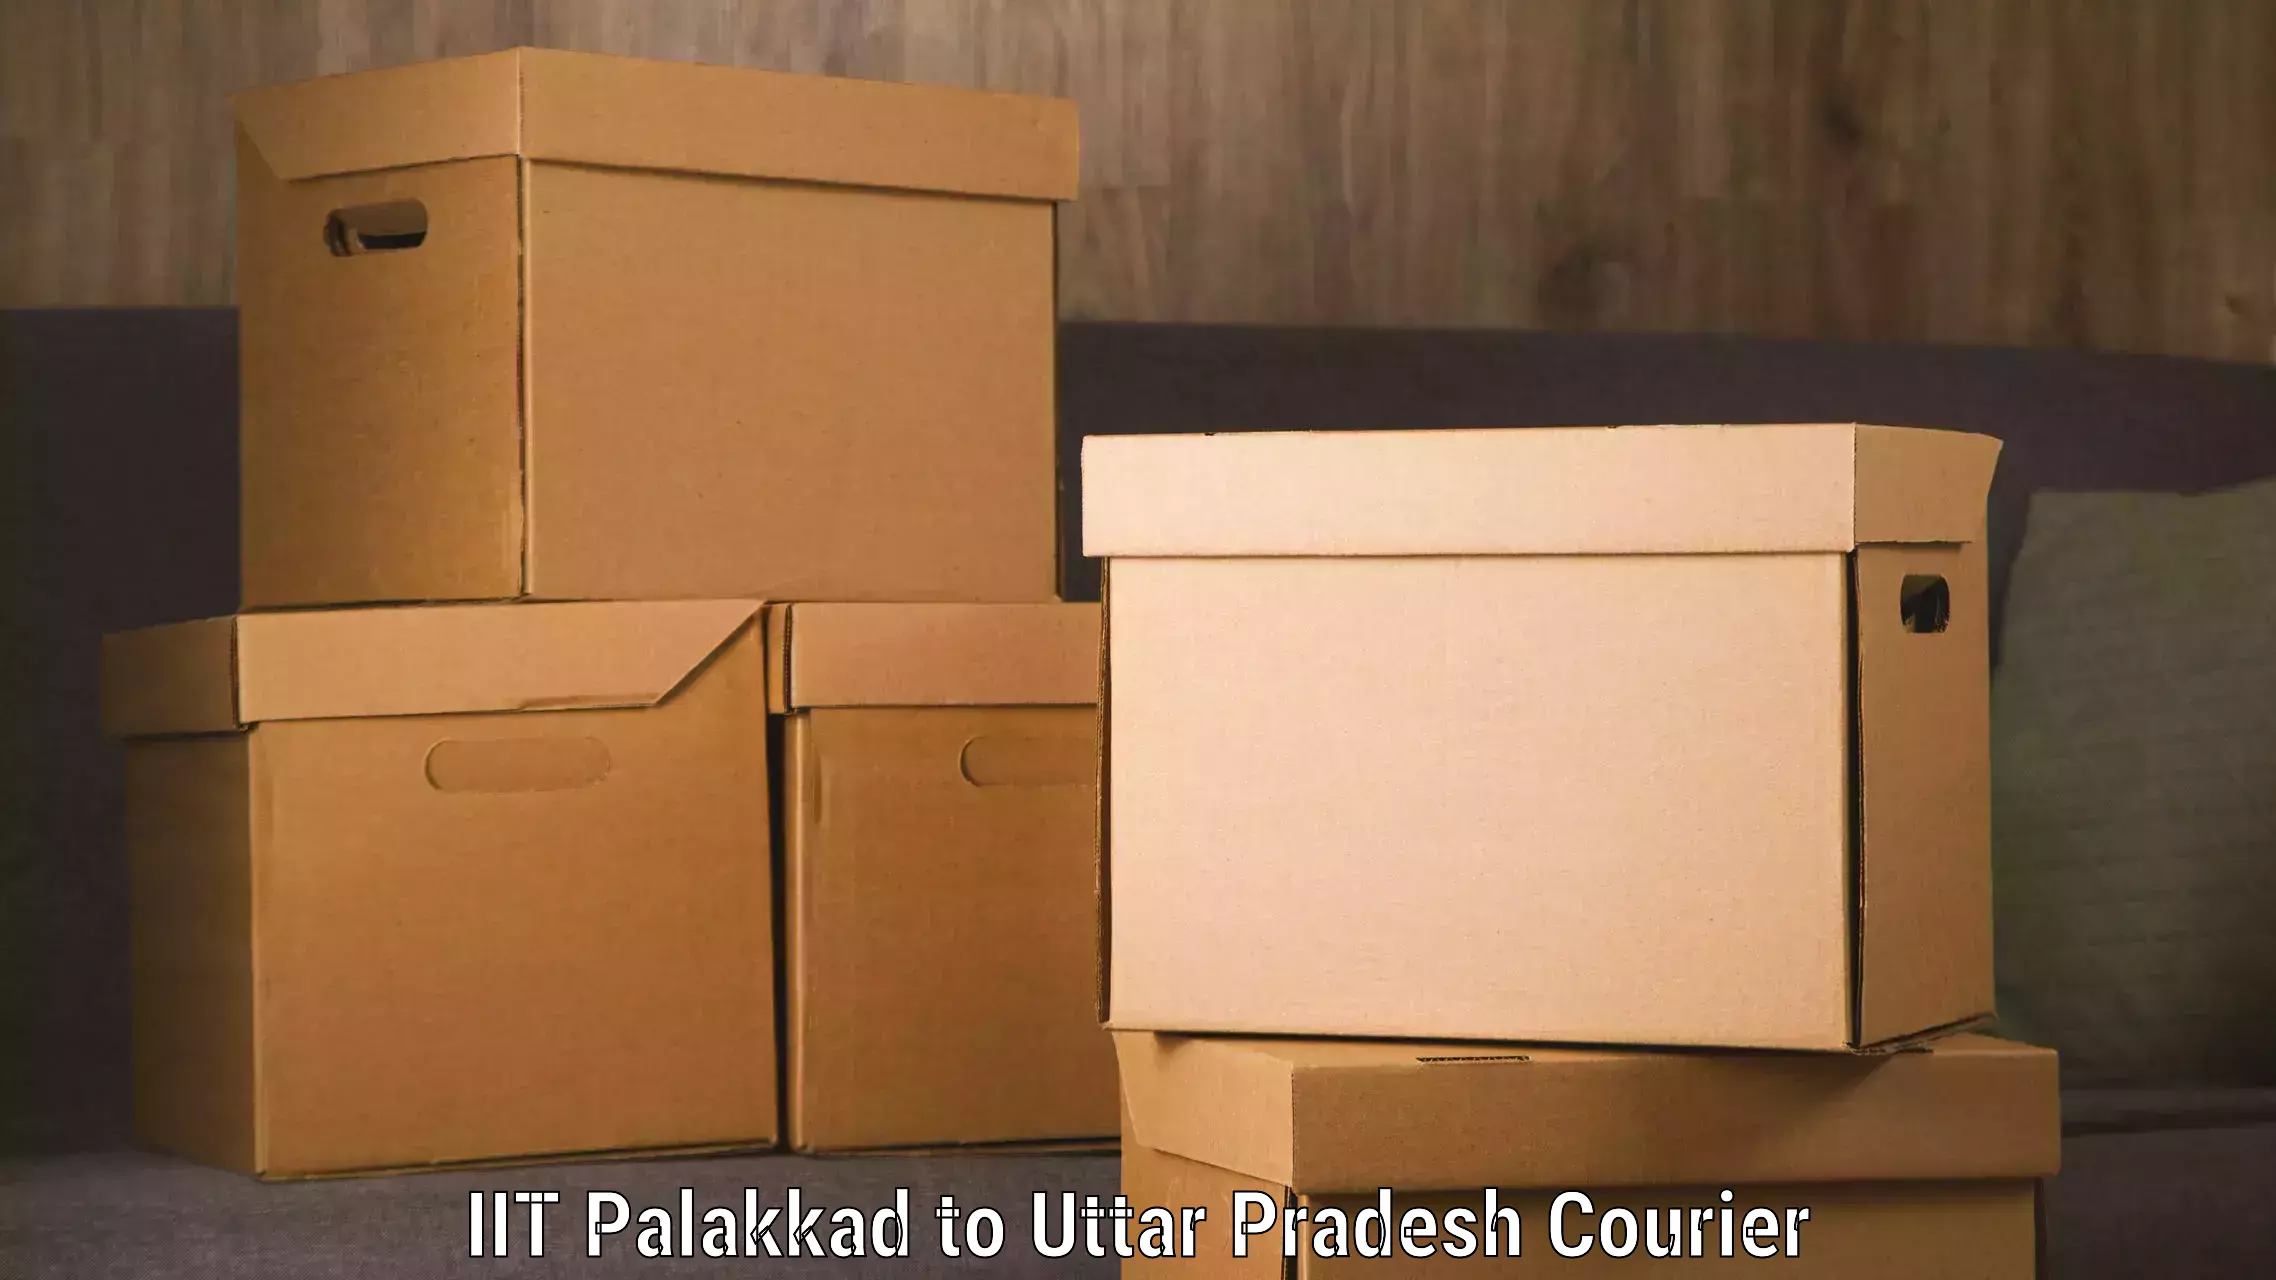 Professional parcel services IIT Palakkad to Varanasi